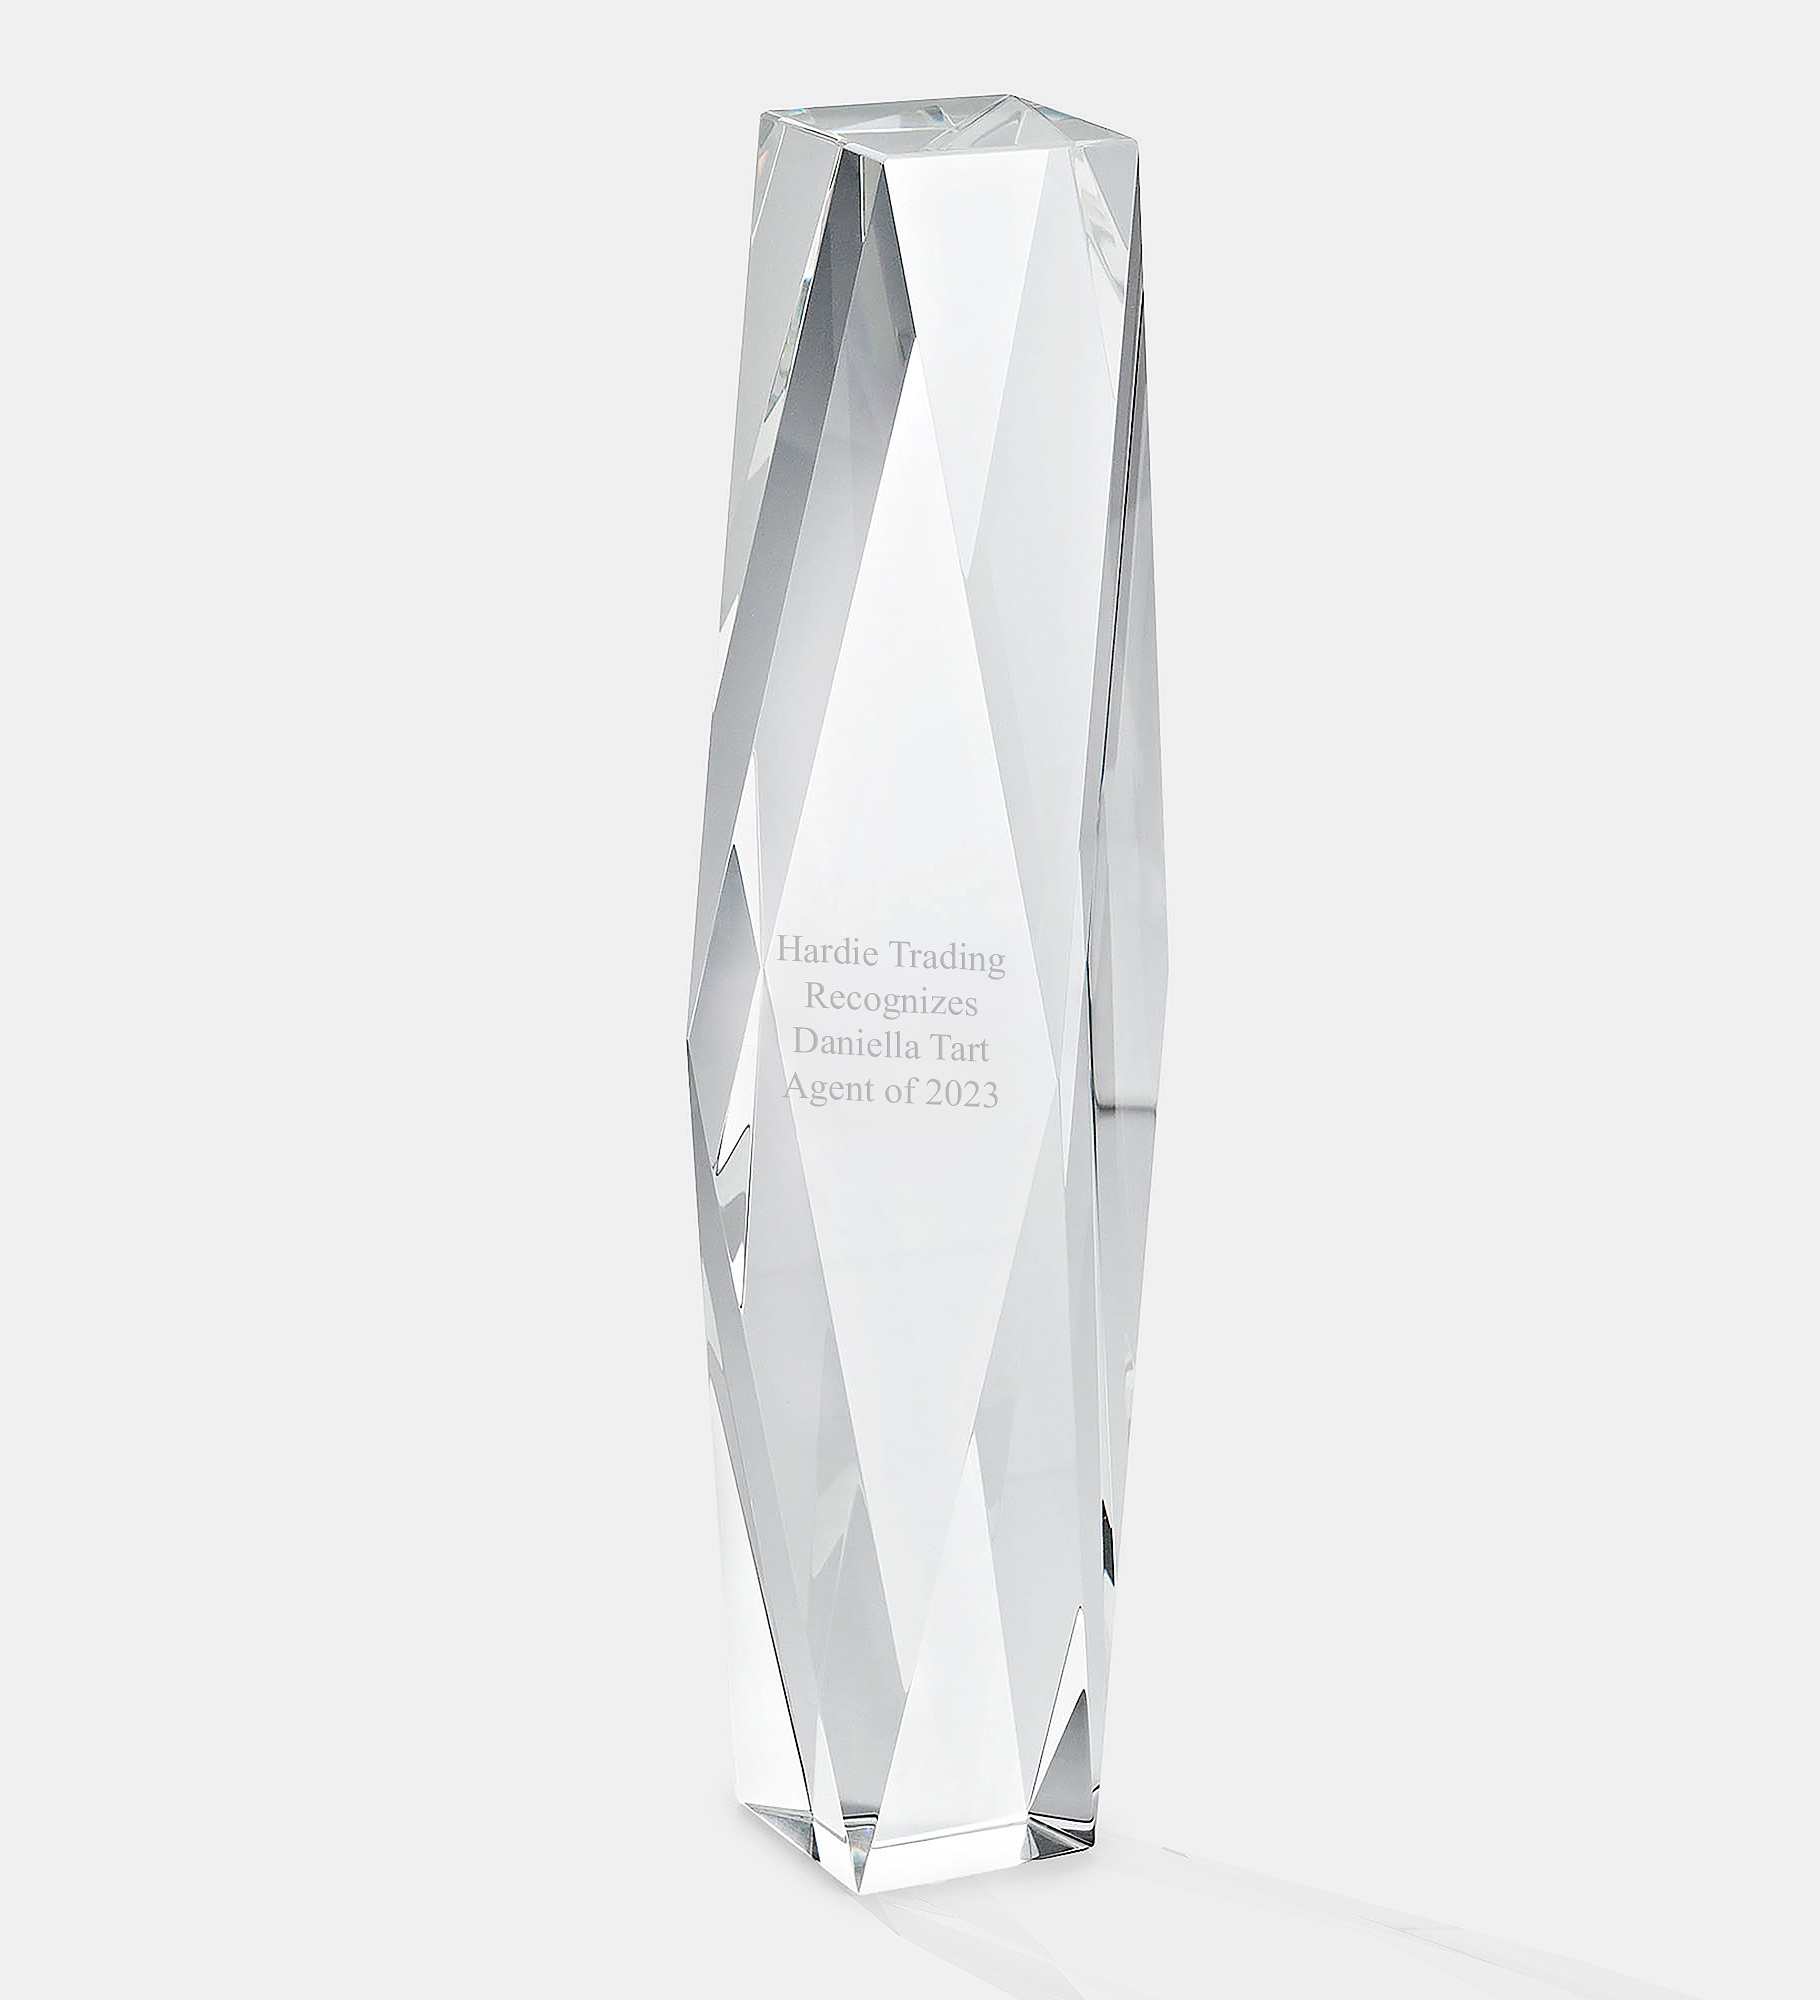 Engraved Faceted Crystal Pillar Award